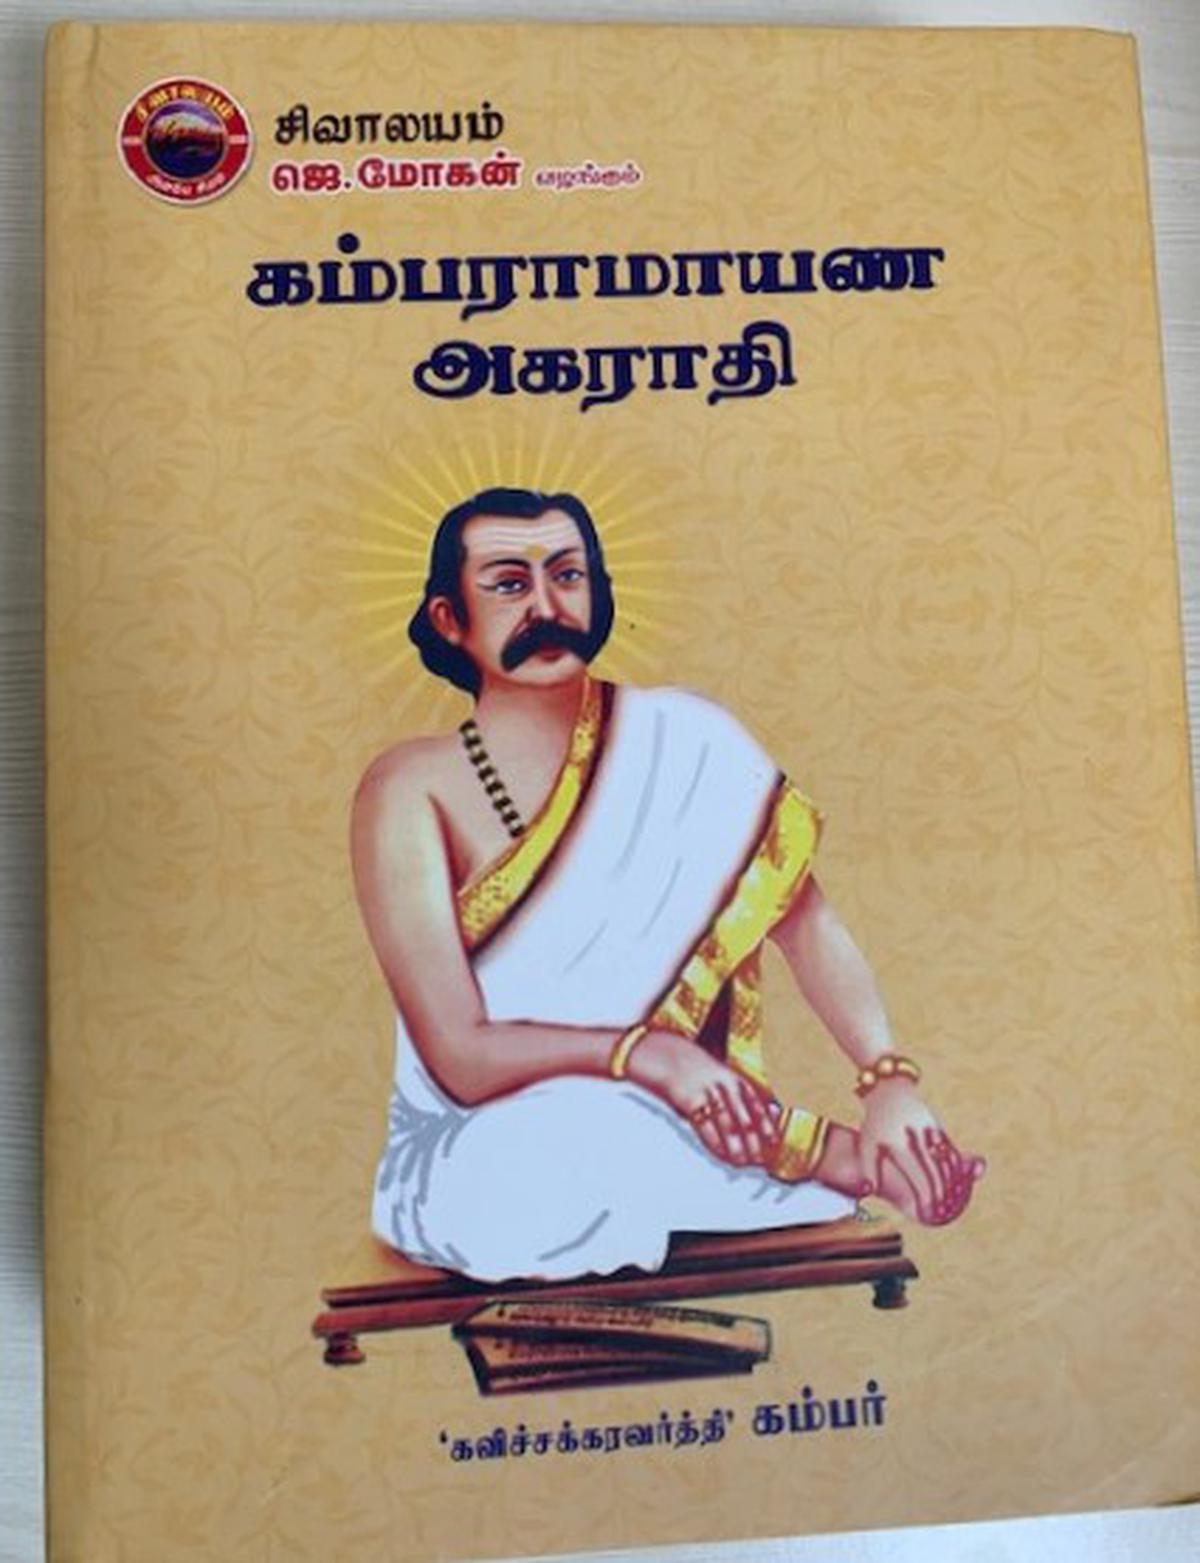 The book cover Kambaramayanam dictionary.